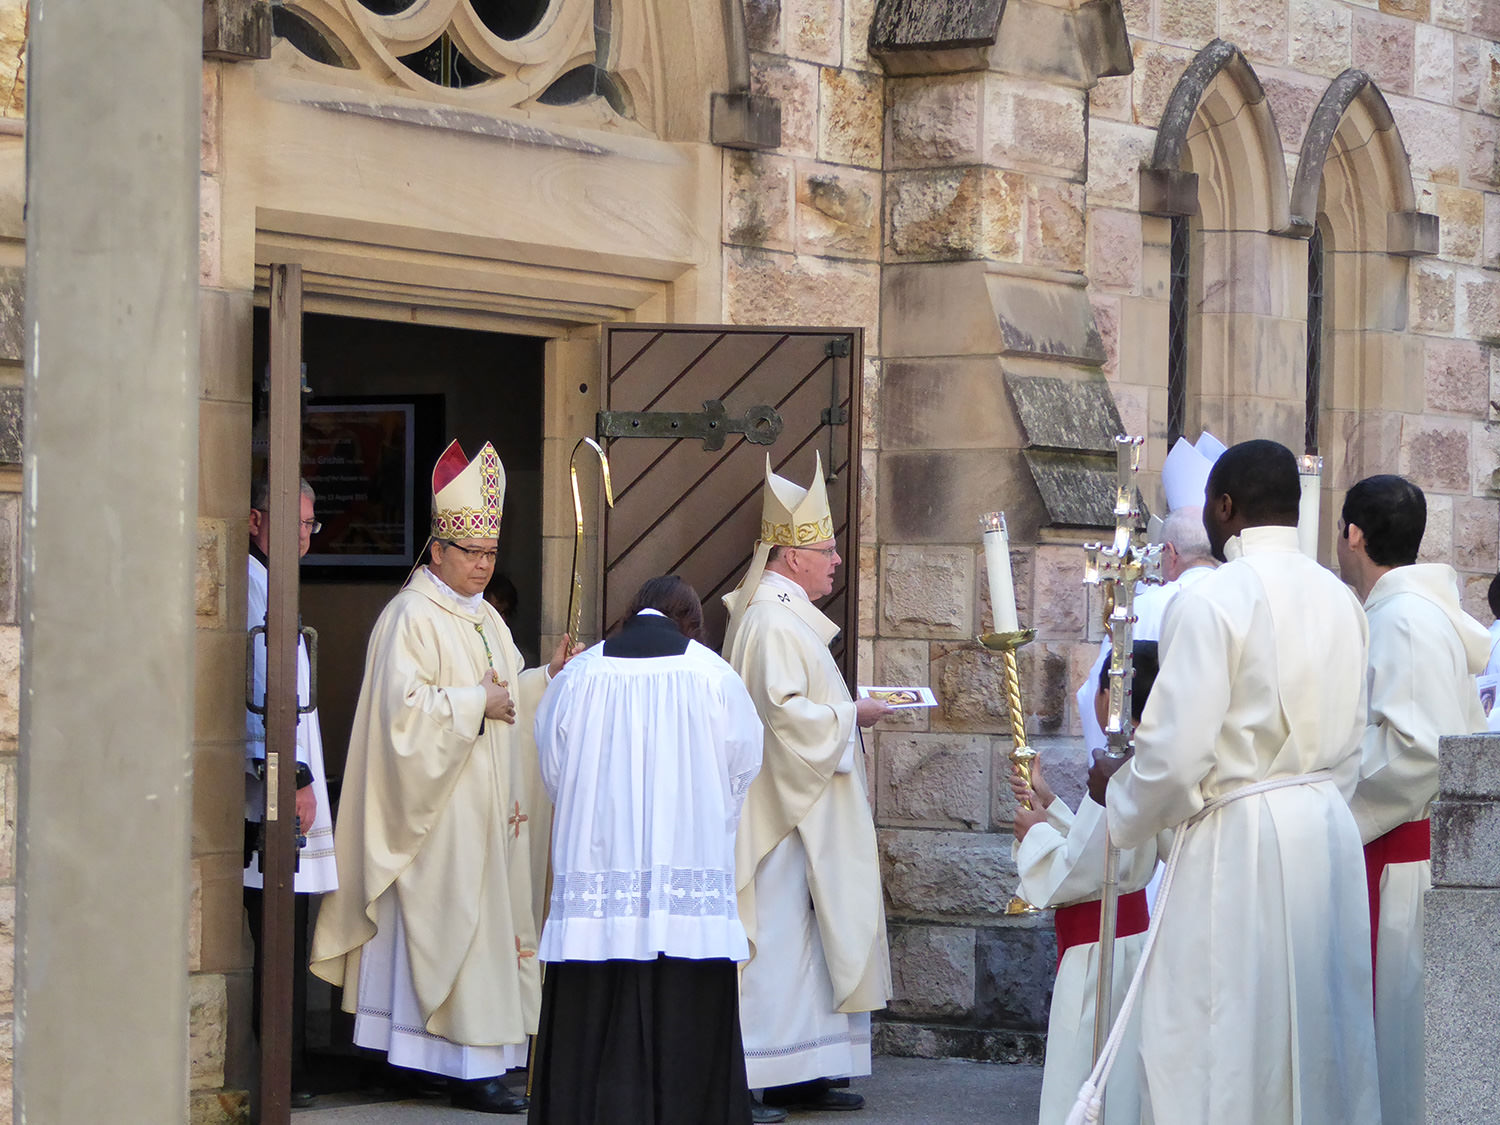 His Excellency Archbishop Adolfo Tito Yllana, Apostolic Nuncio to Australia, prepares for the Saint Mary MacKillop Feast Day Mass, Cathedral of St Stephen Brisbane 2015